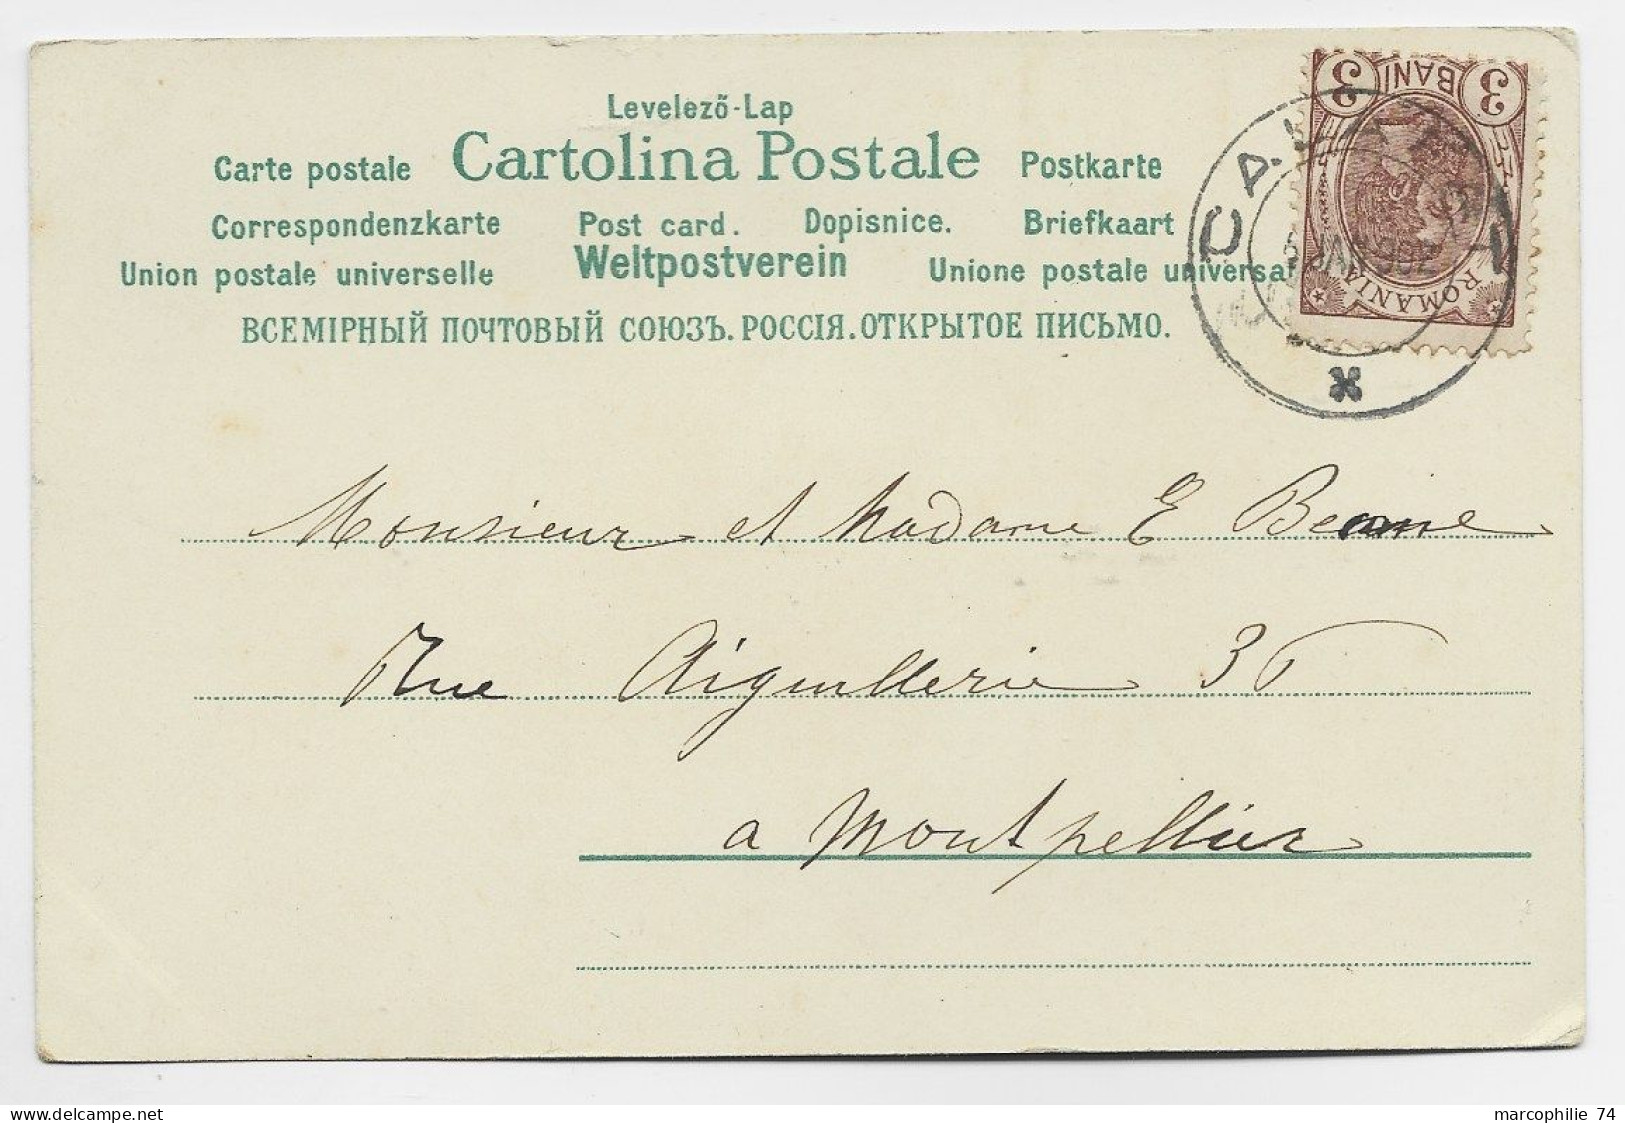 ROMANIA ROUMANIE 3 BANI  CAVAFAT 5 JAN 1902 SOLO CARTA POSTALA  FANTAISE TO FRANCE - Covers & Documents